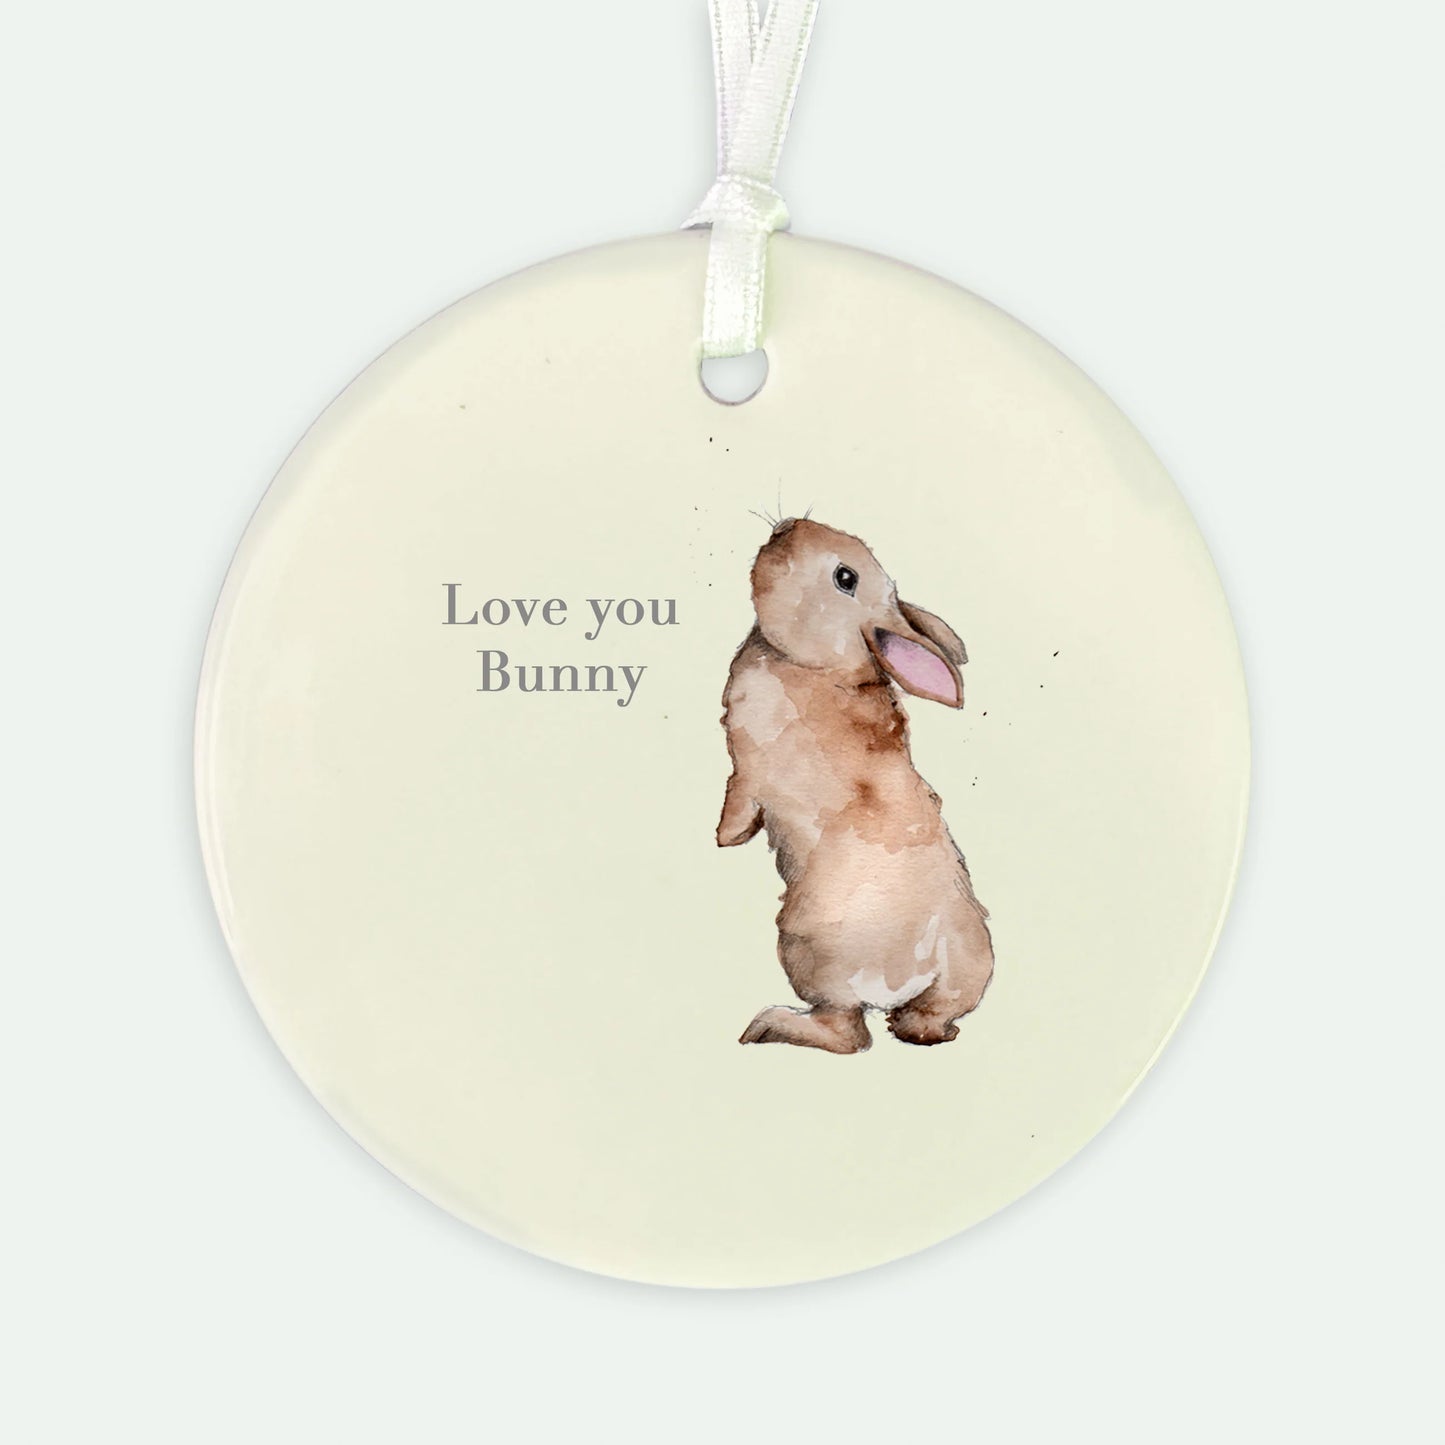 Hanging Ceramic Decoration - Bunny Love You